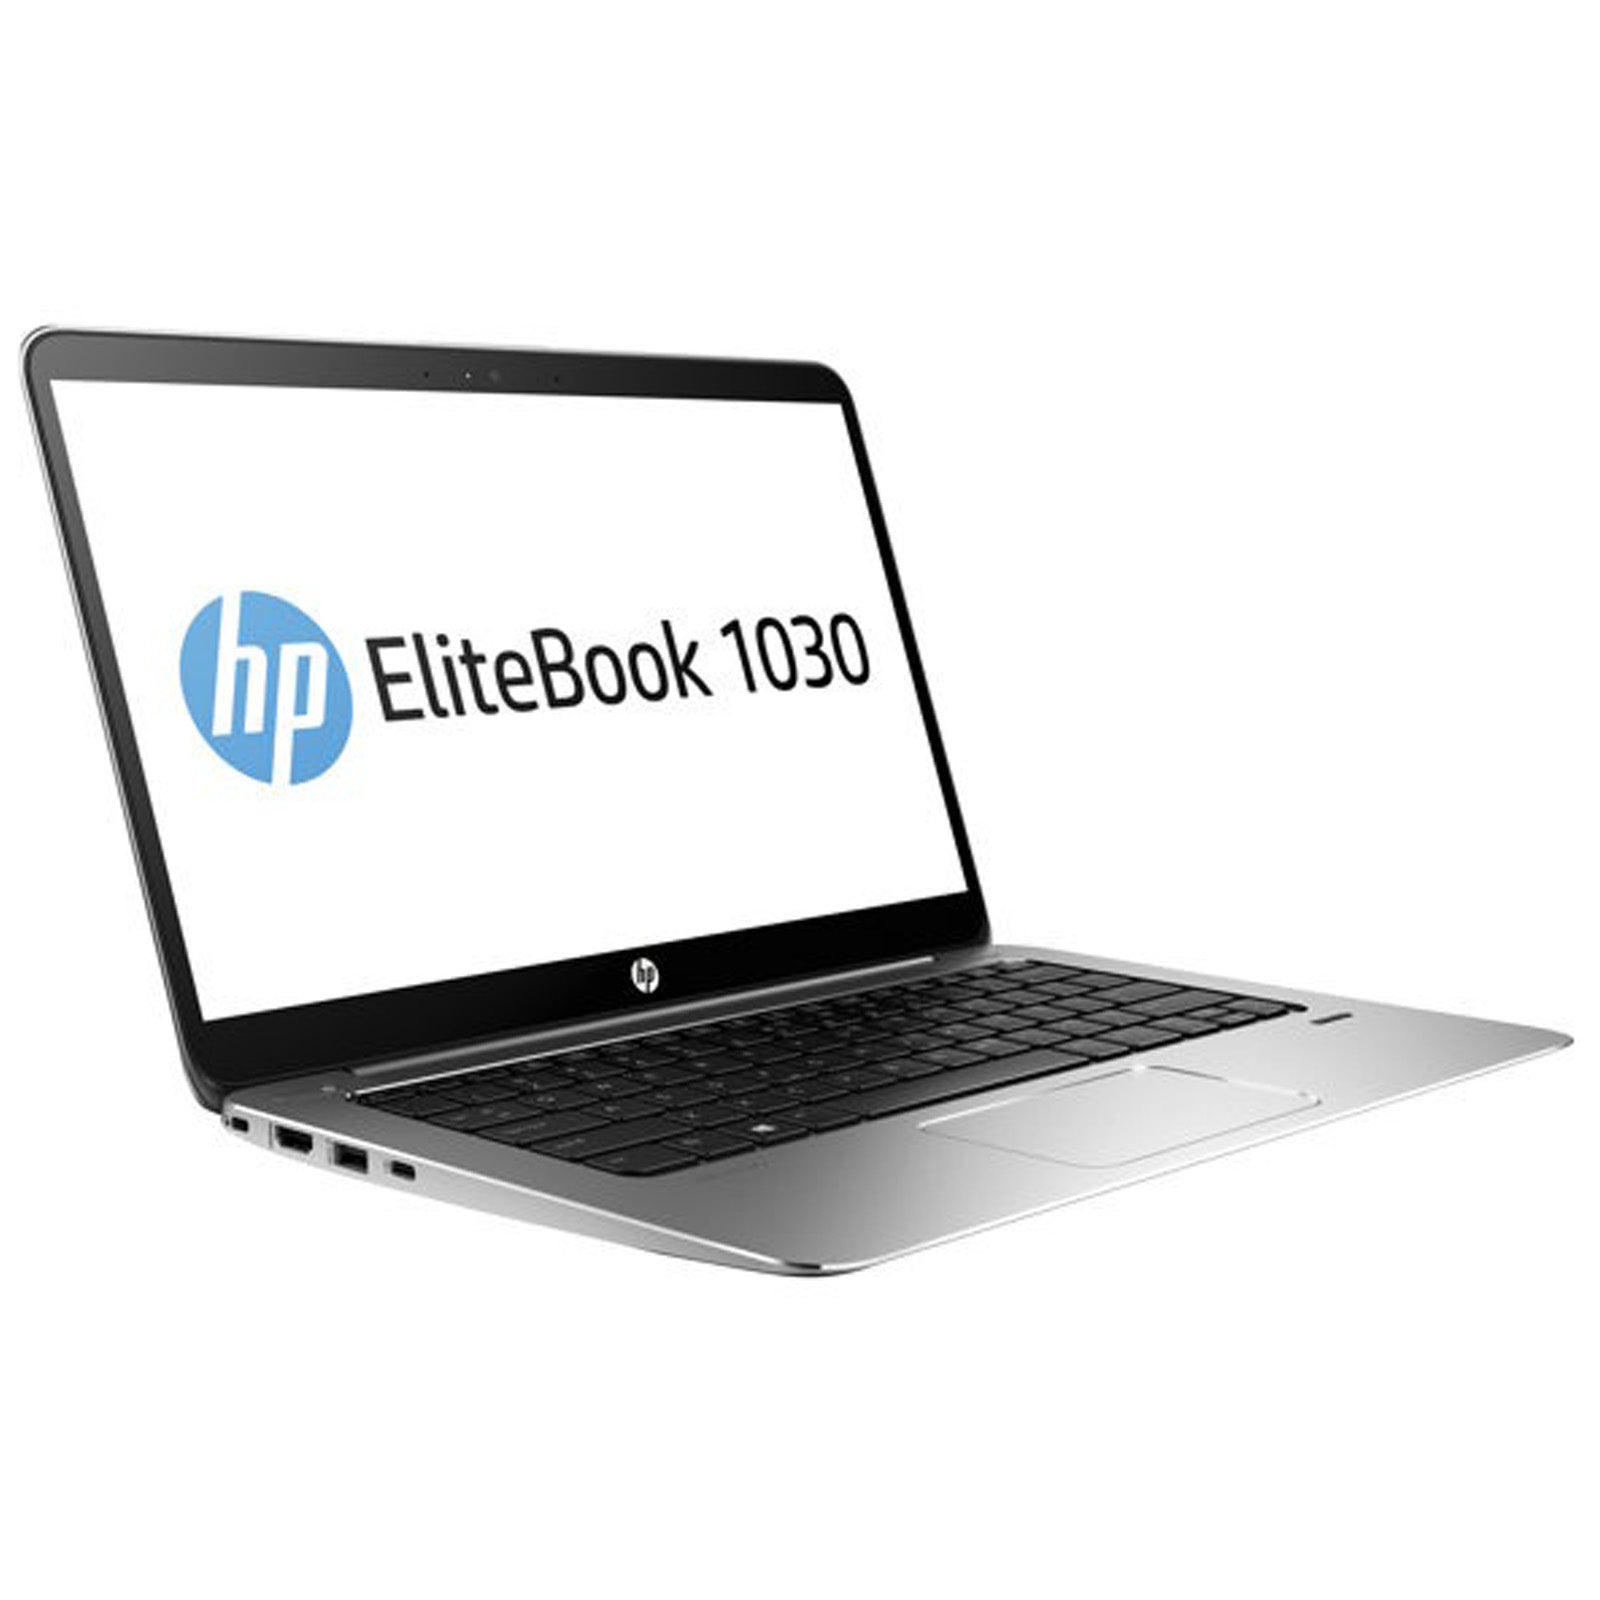 HP EliteBook 1030 G1 Laptop: Intel m5, 13.3" FHD , 8GB RAM, 256GB SSD, Warranty